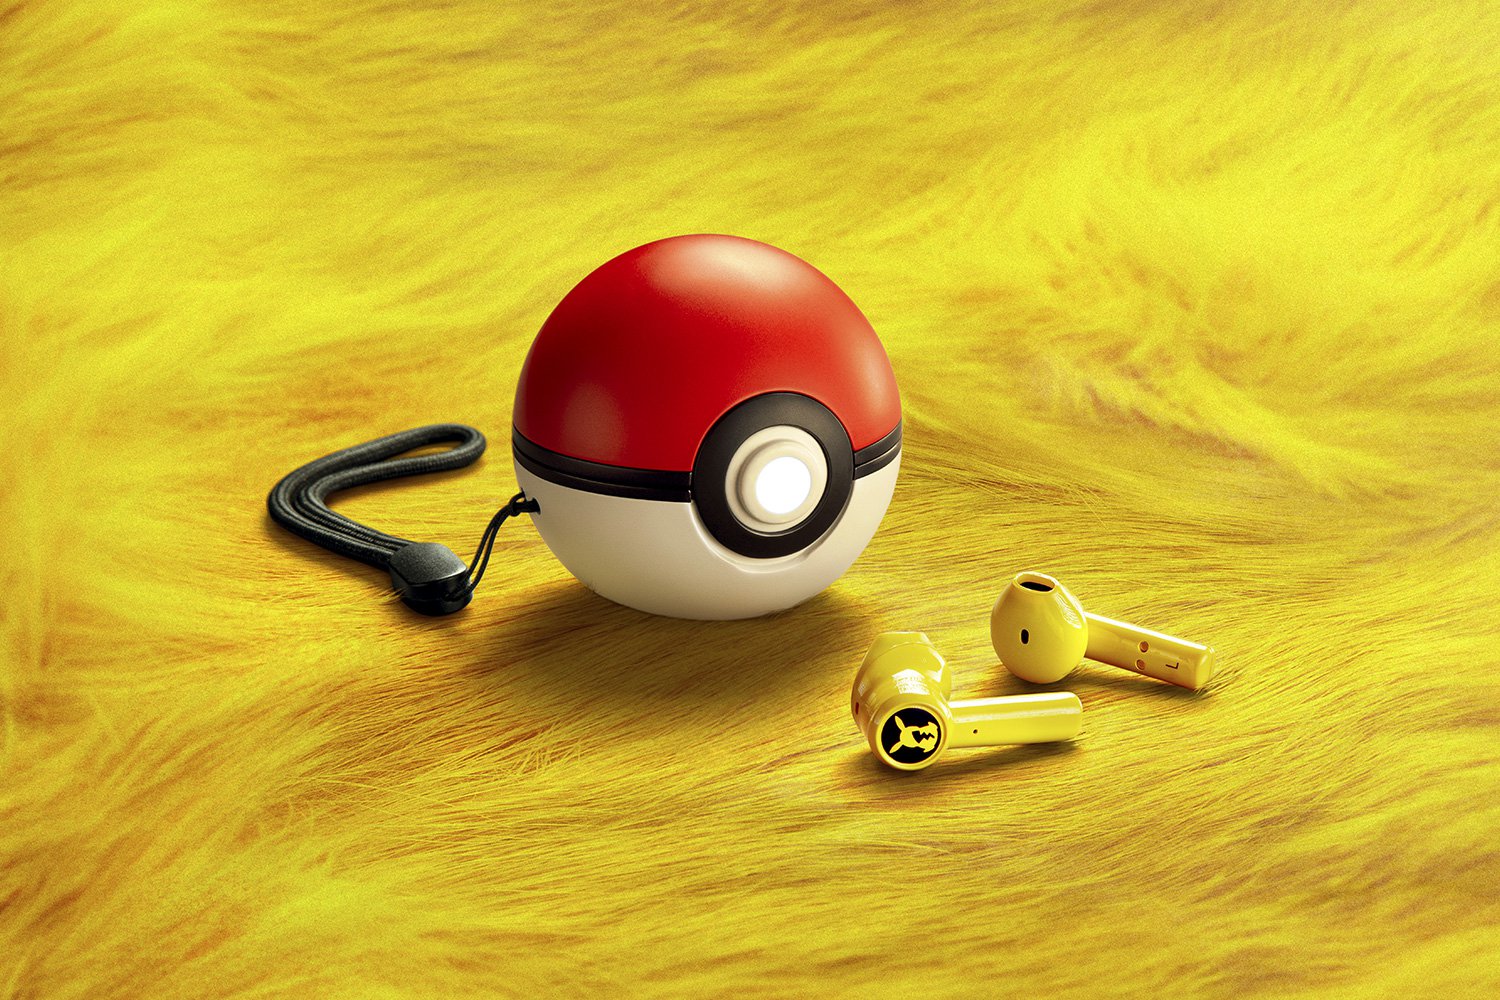 Pikachu Limited Edition True Wireless Earbuds